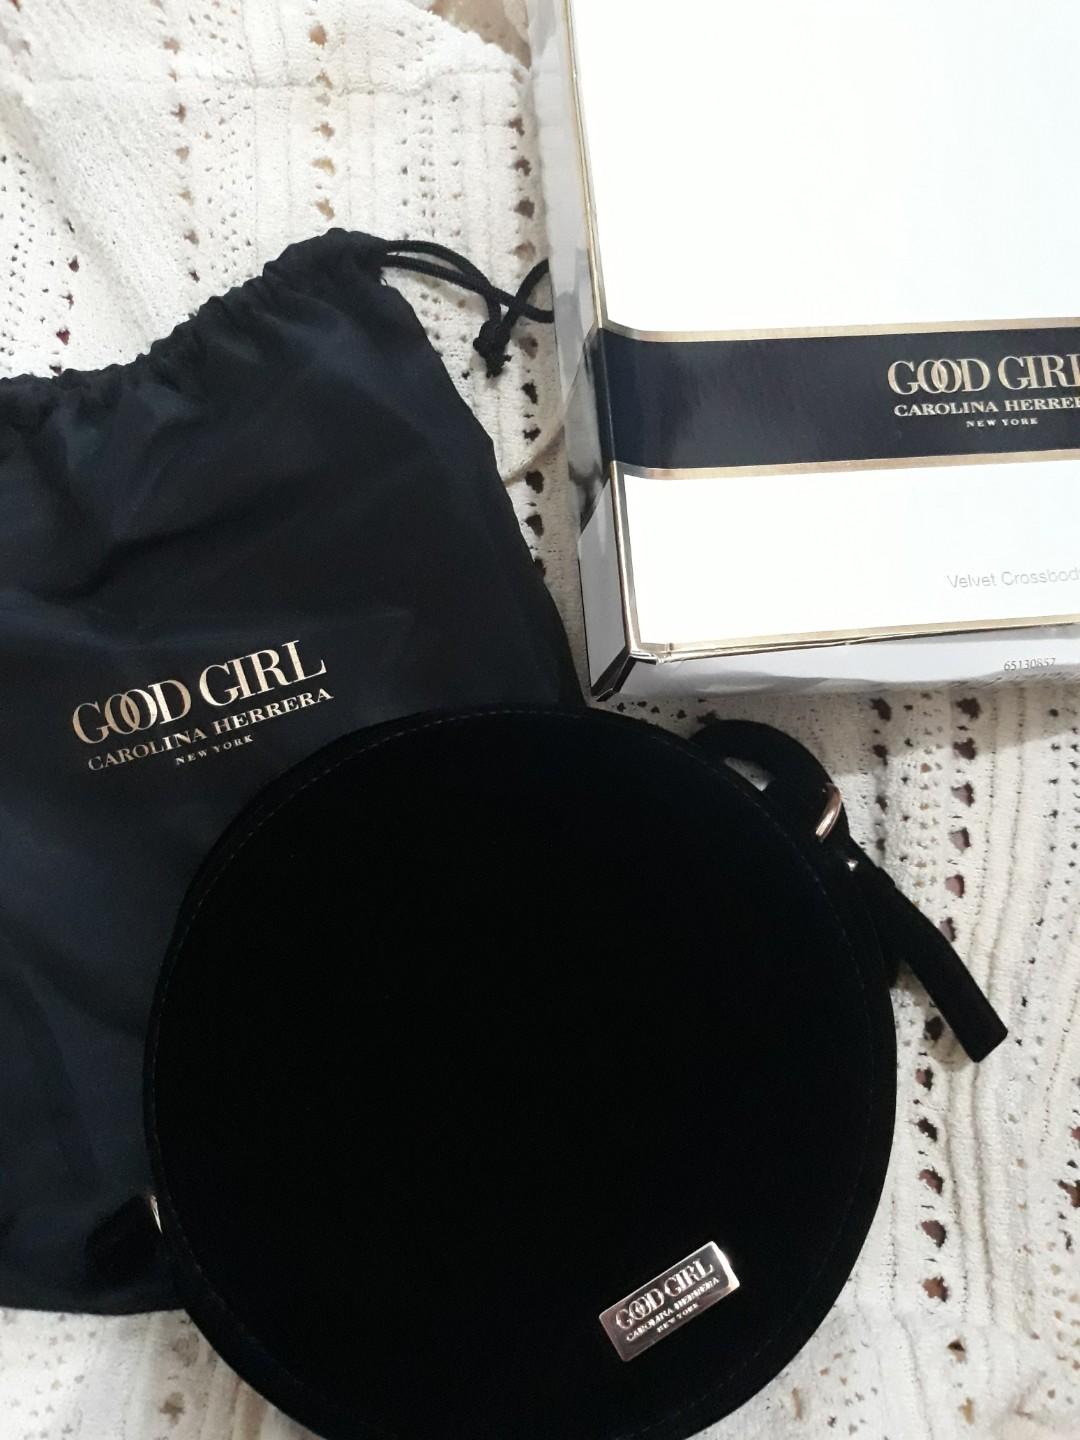 Carolina Herrera Velvet Crossbody Bags